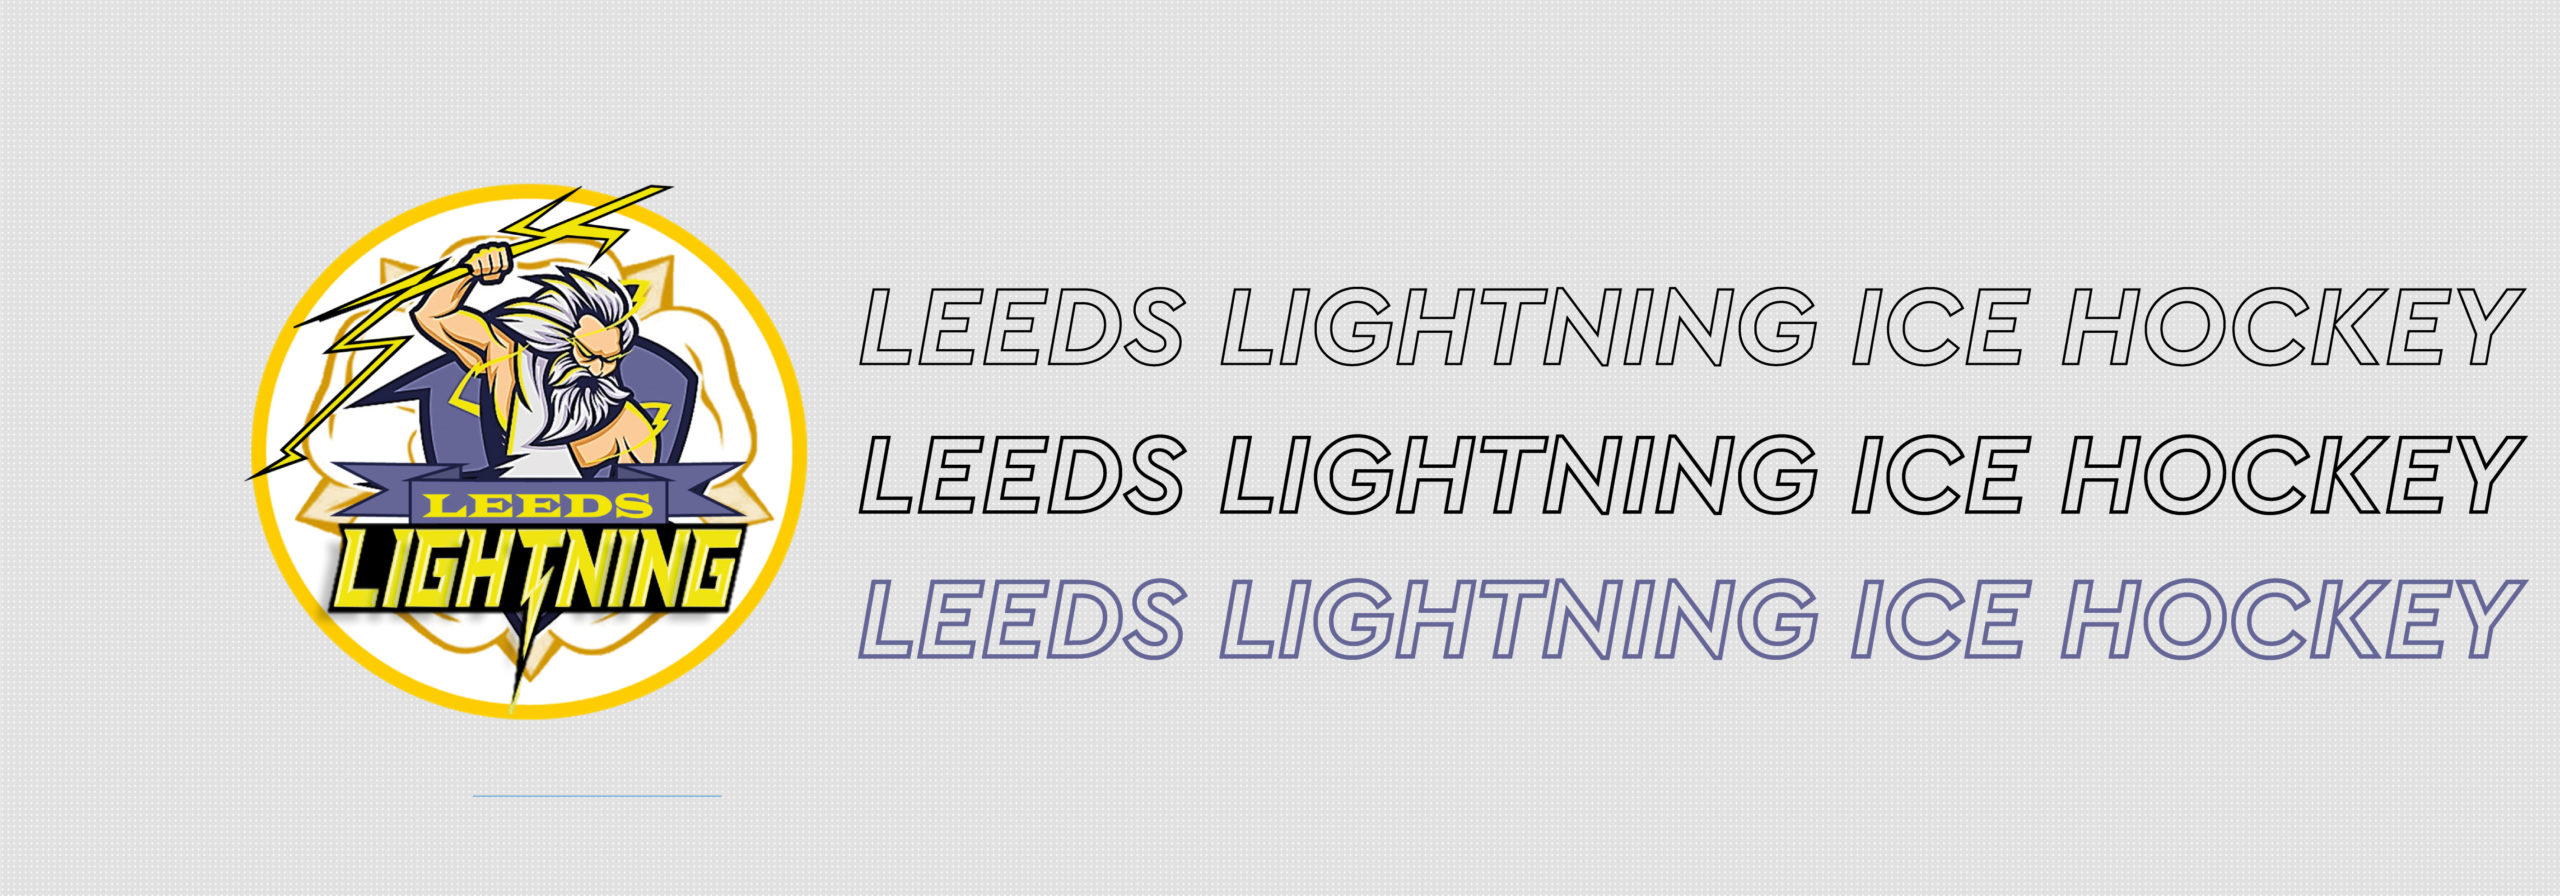 Leeds Lightning Ice Hockey Club